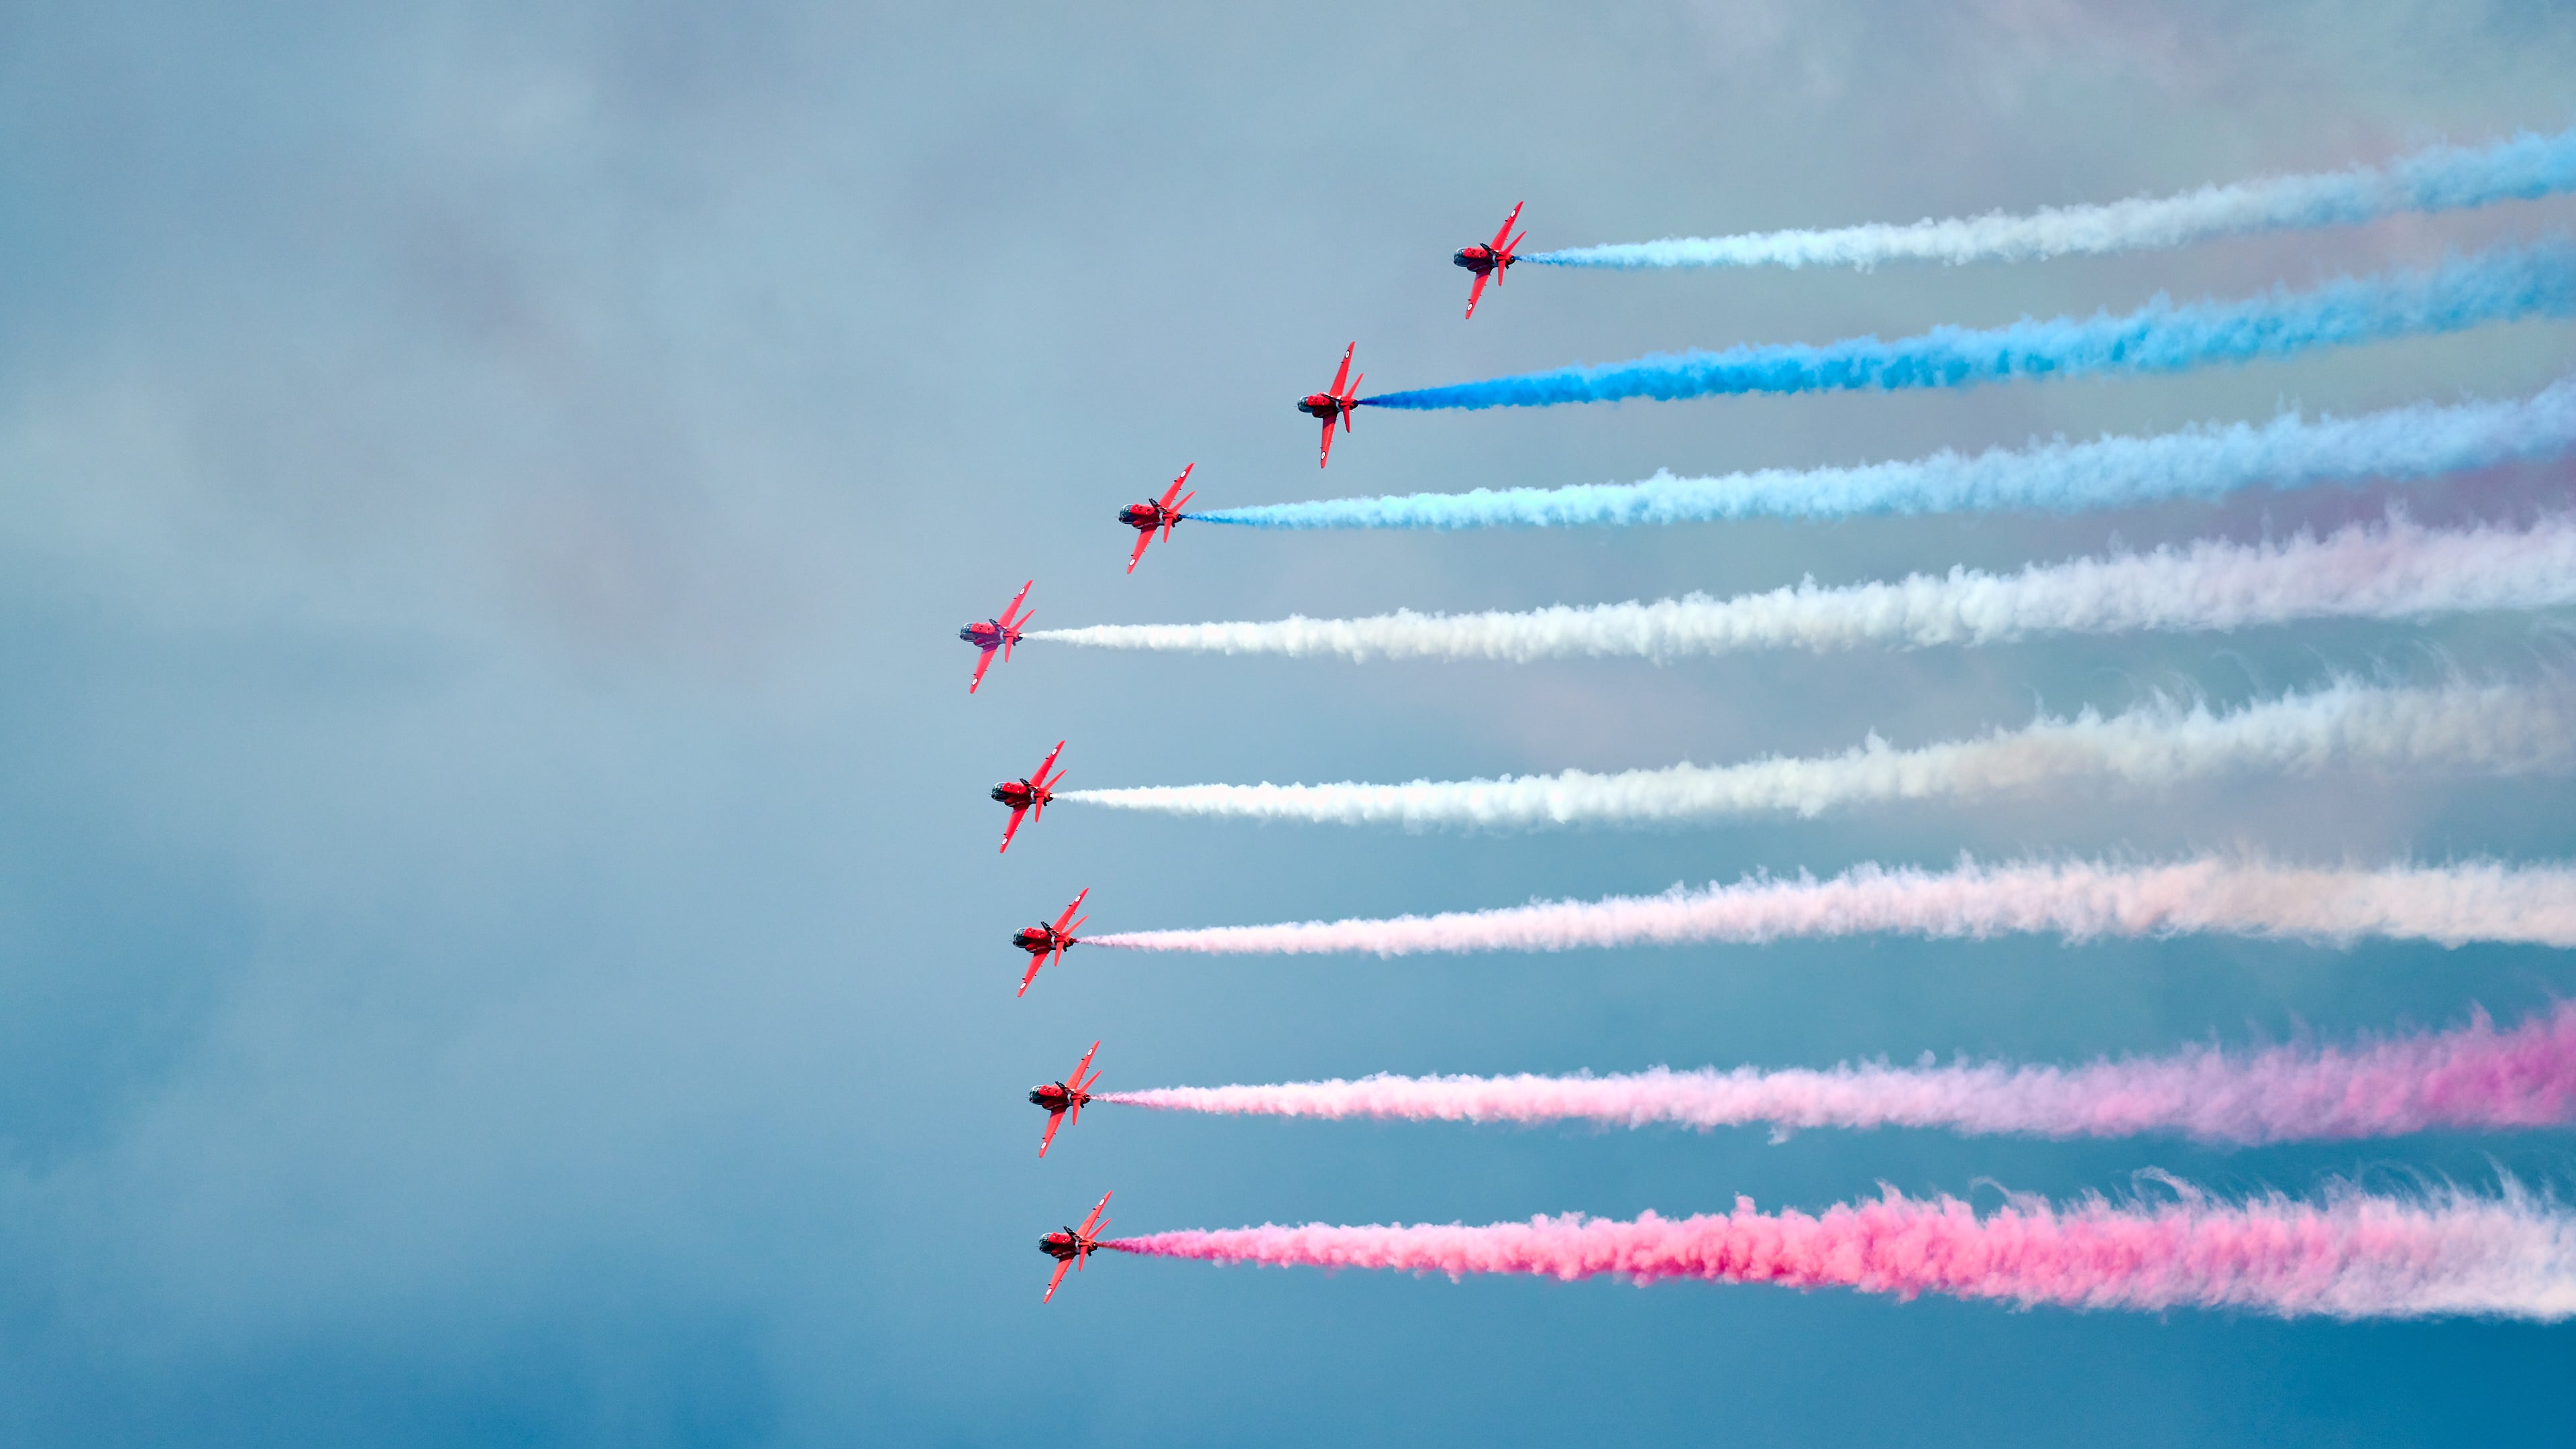 RAF Red Arrows : White and Blue Smoke Side View 2 - #redarrows #redarrowstour